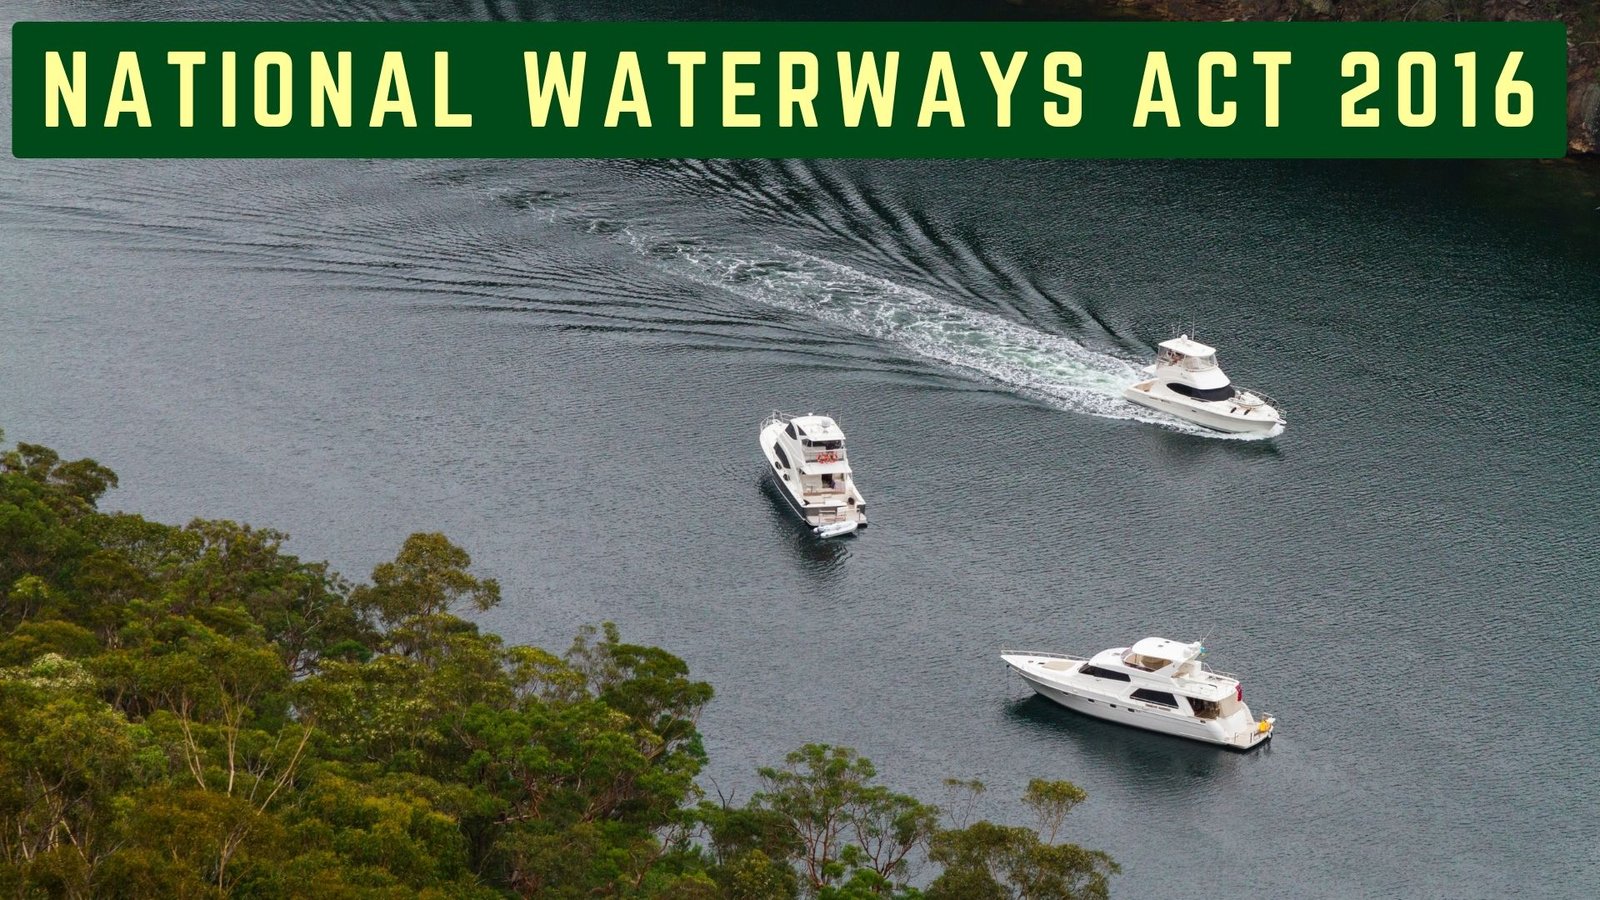 National Waterways Act 2016, Lawforeverything